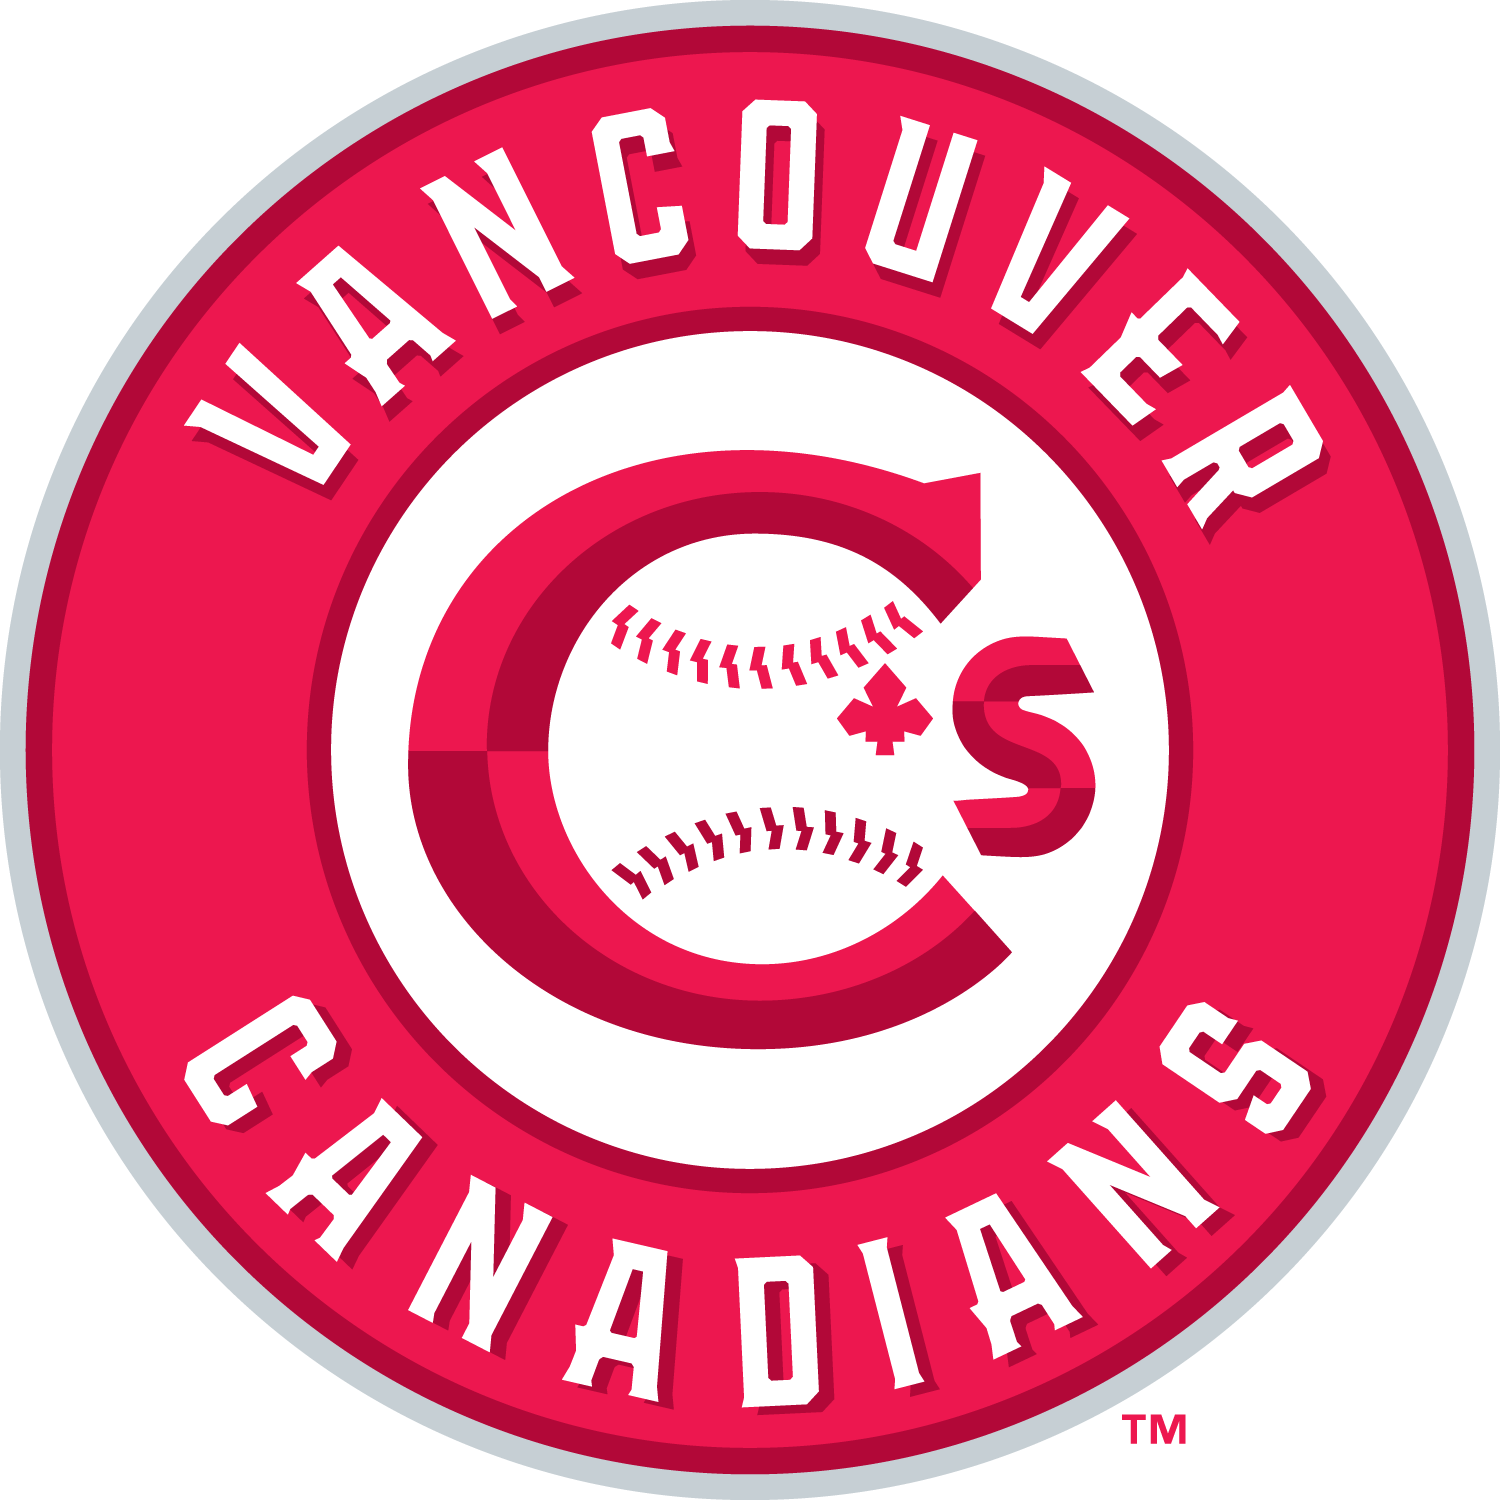 Vancouver Canadians logo